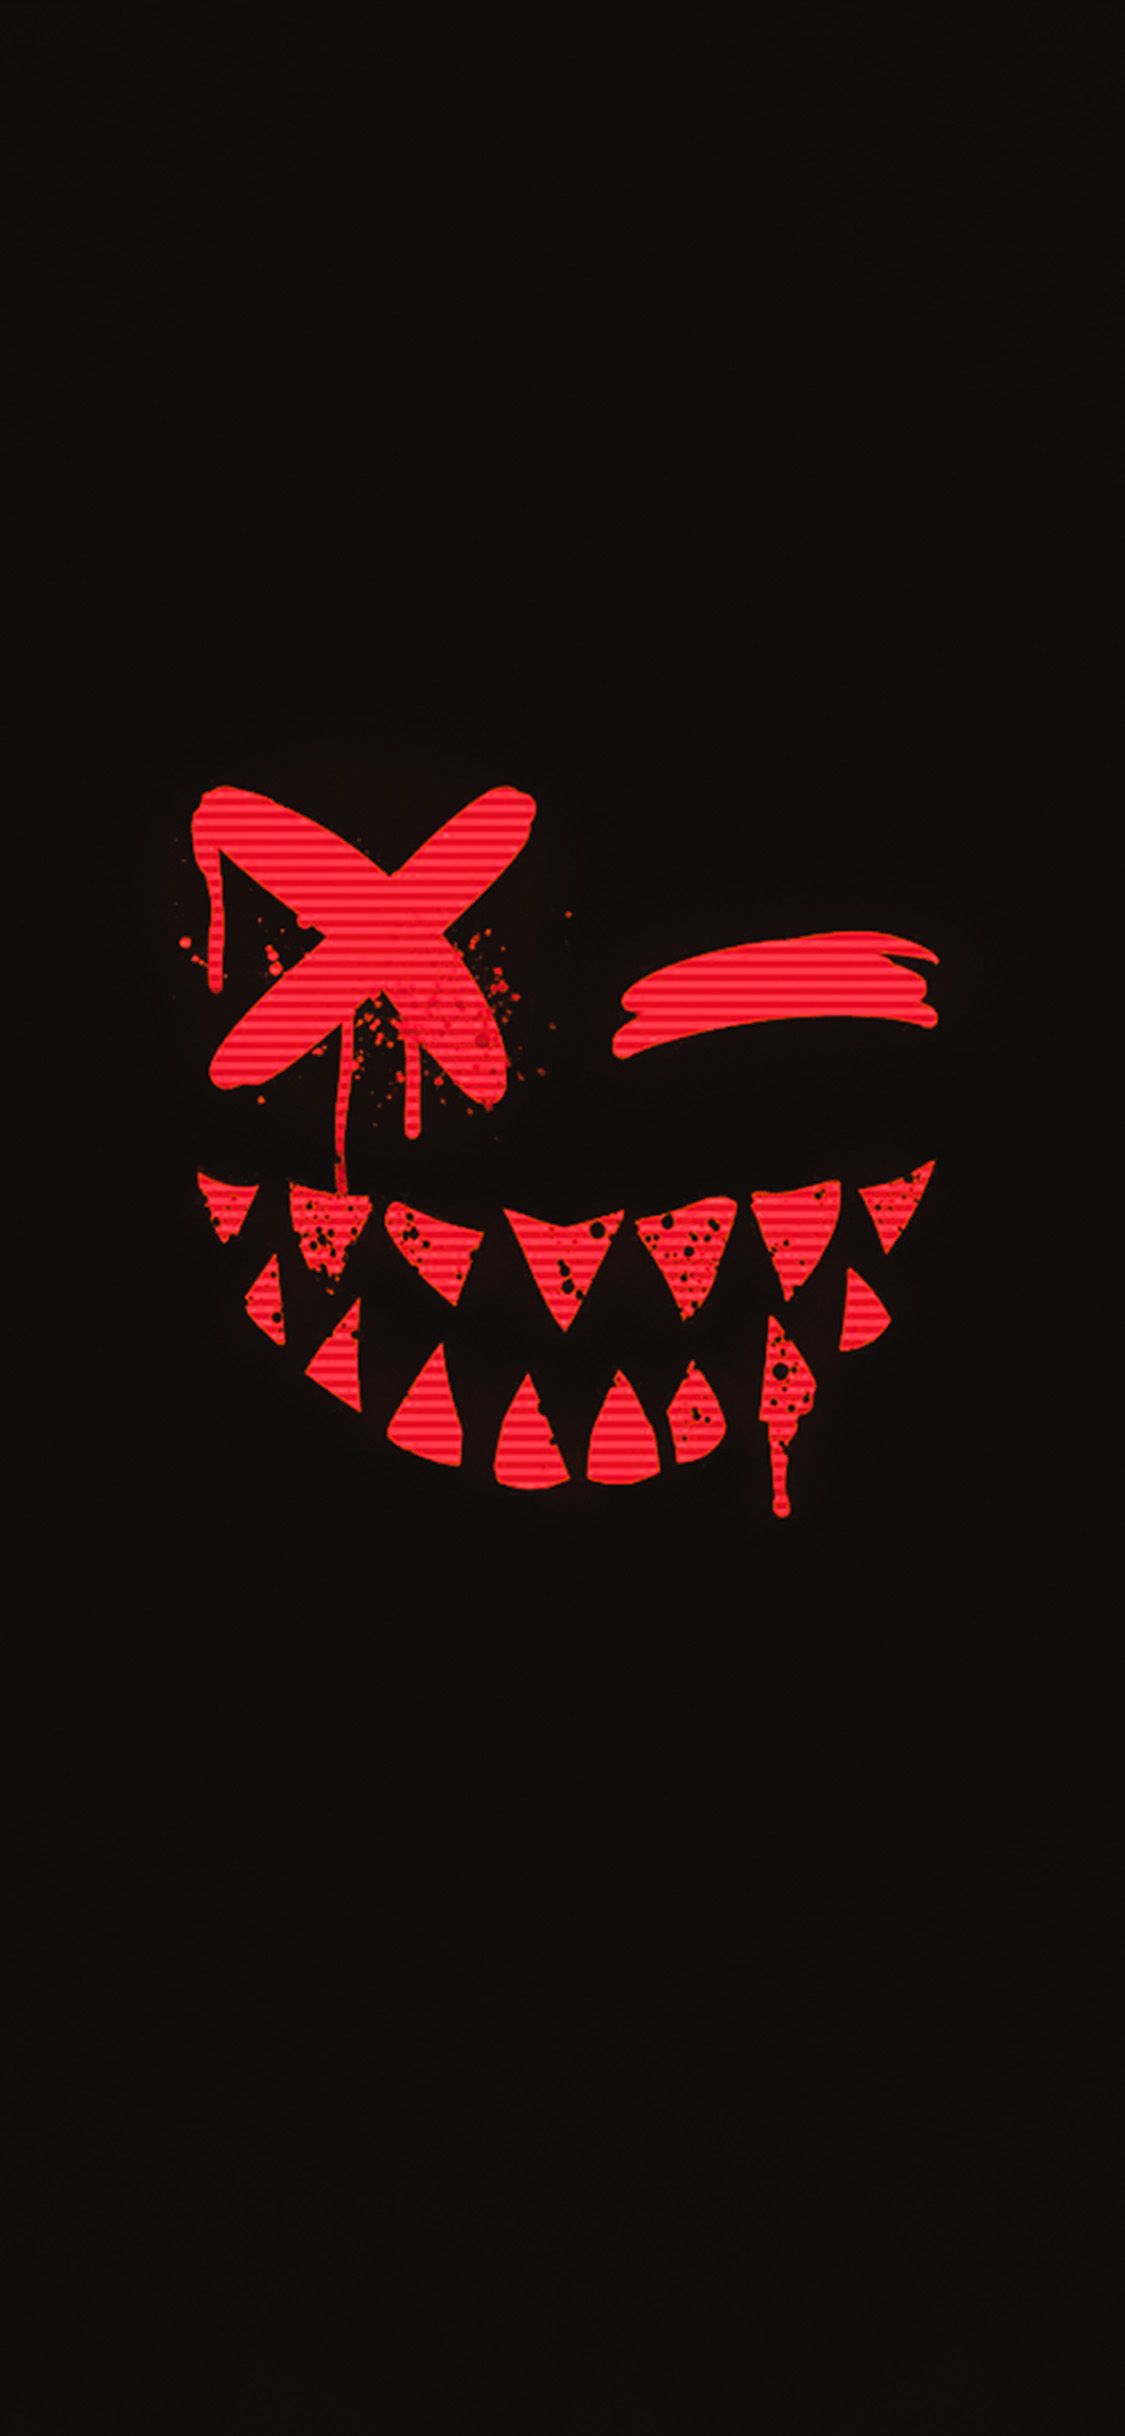 iPhone X wallpaper. art smile dark horror face simple